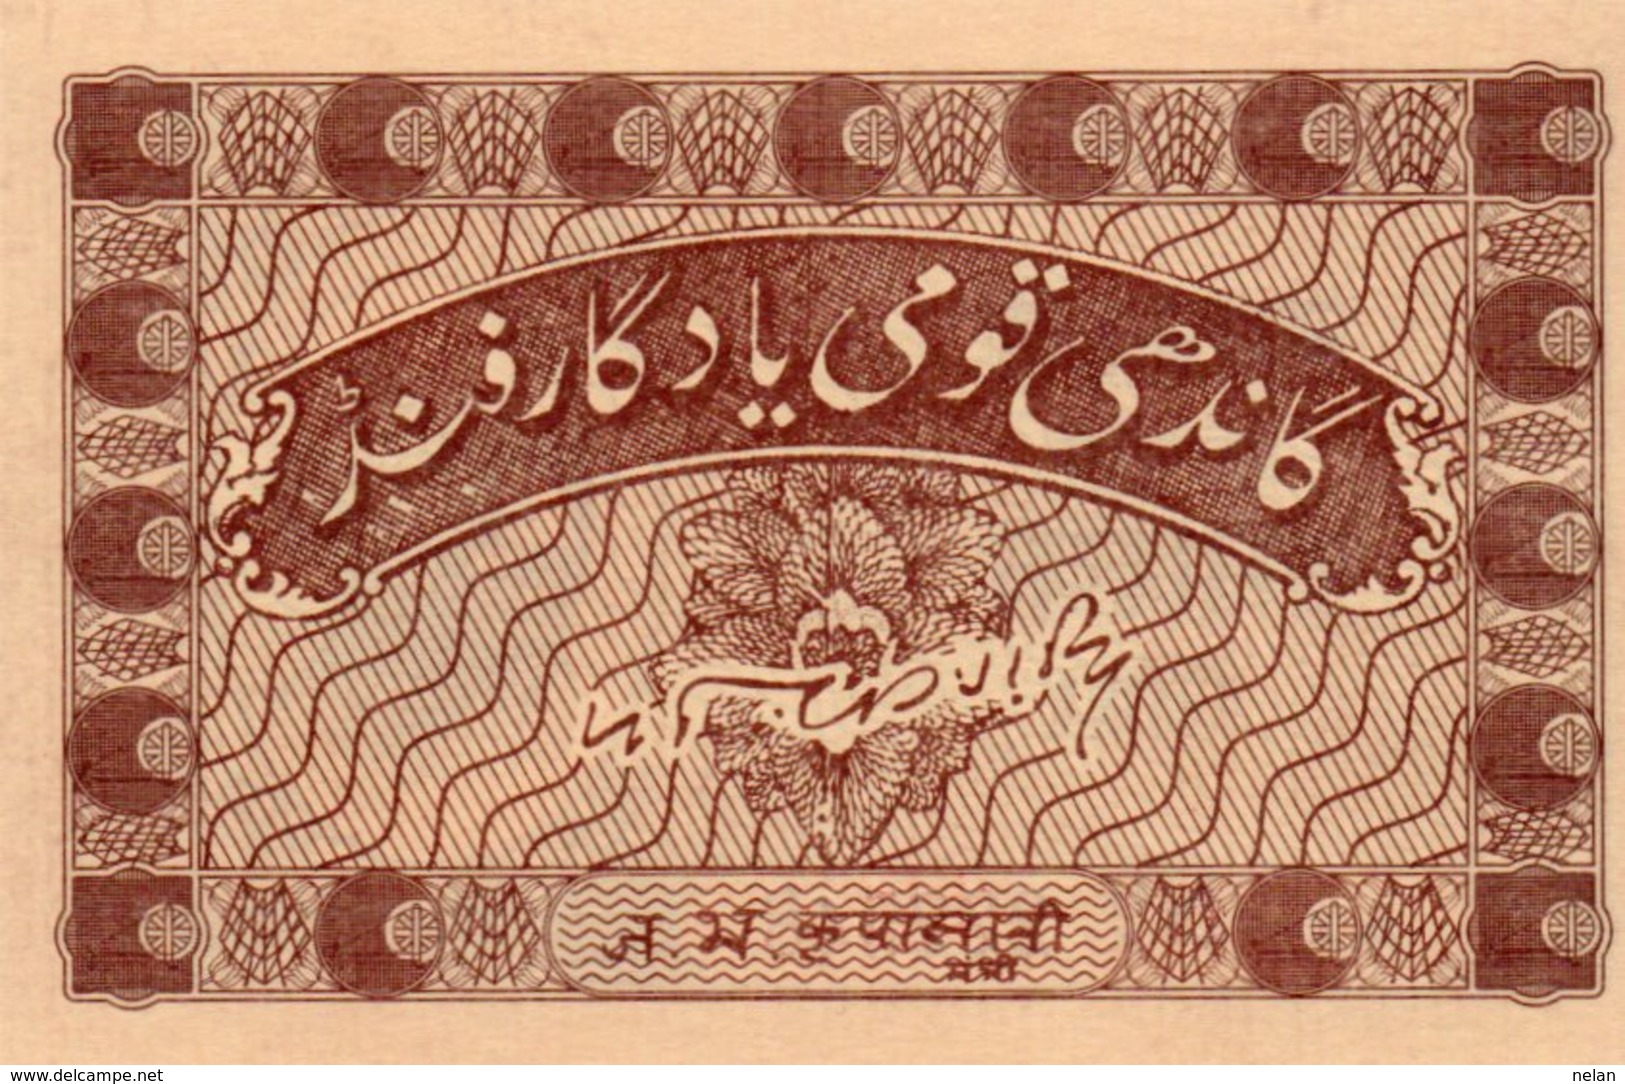 INDIA 5 RUPEES  1949  P-UNL3  UNC-Donation Receipts - India